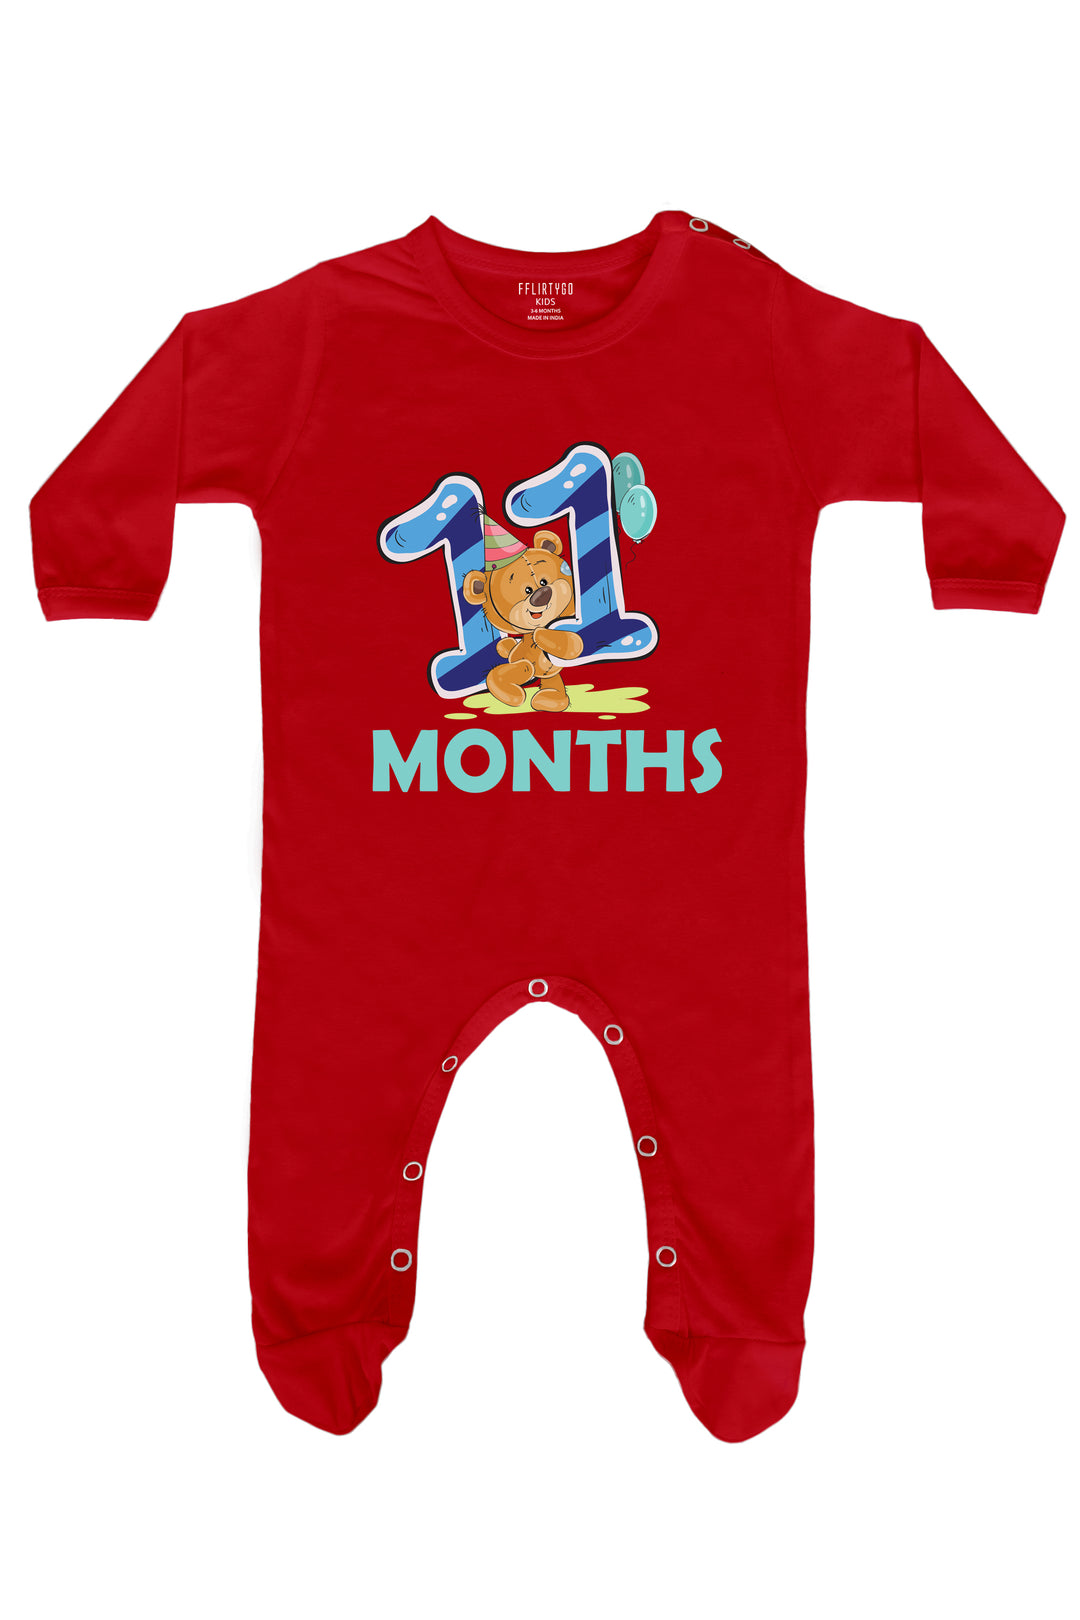 Eleven Months Milestone Baby Romper | Onesies